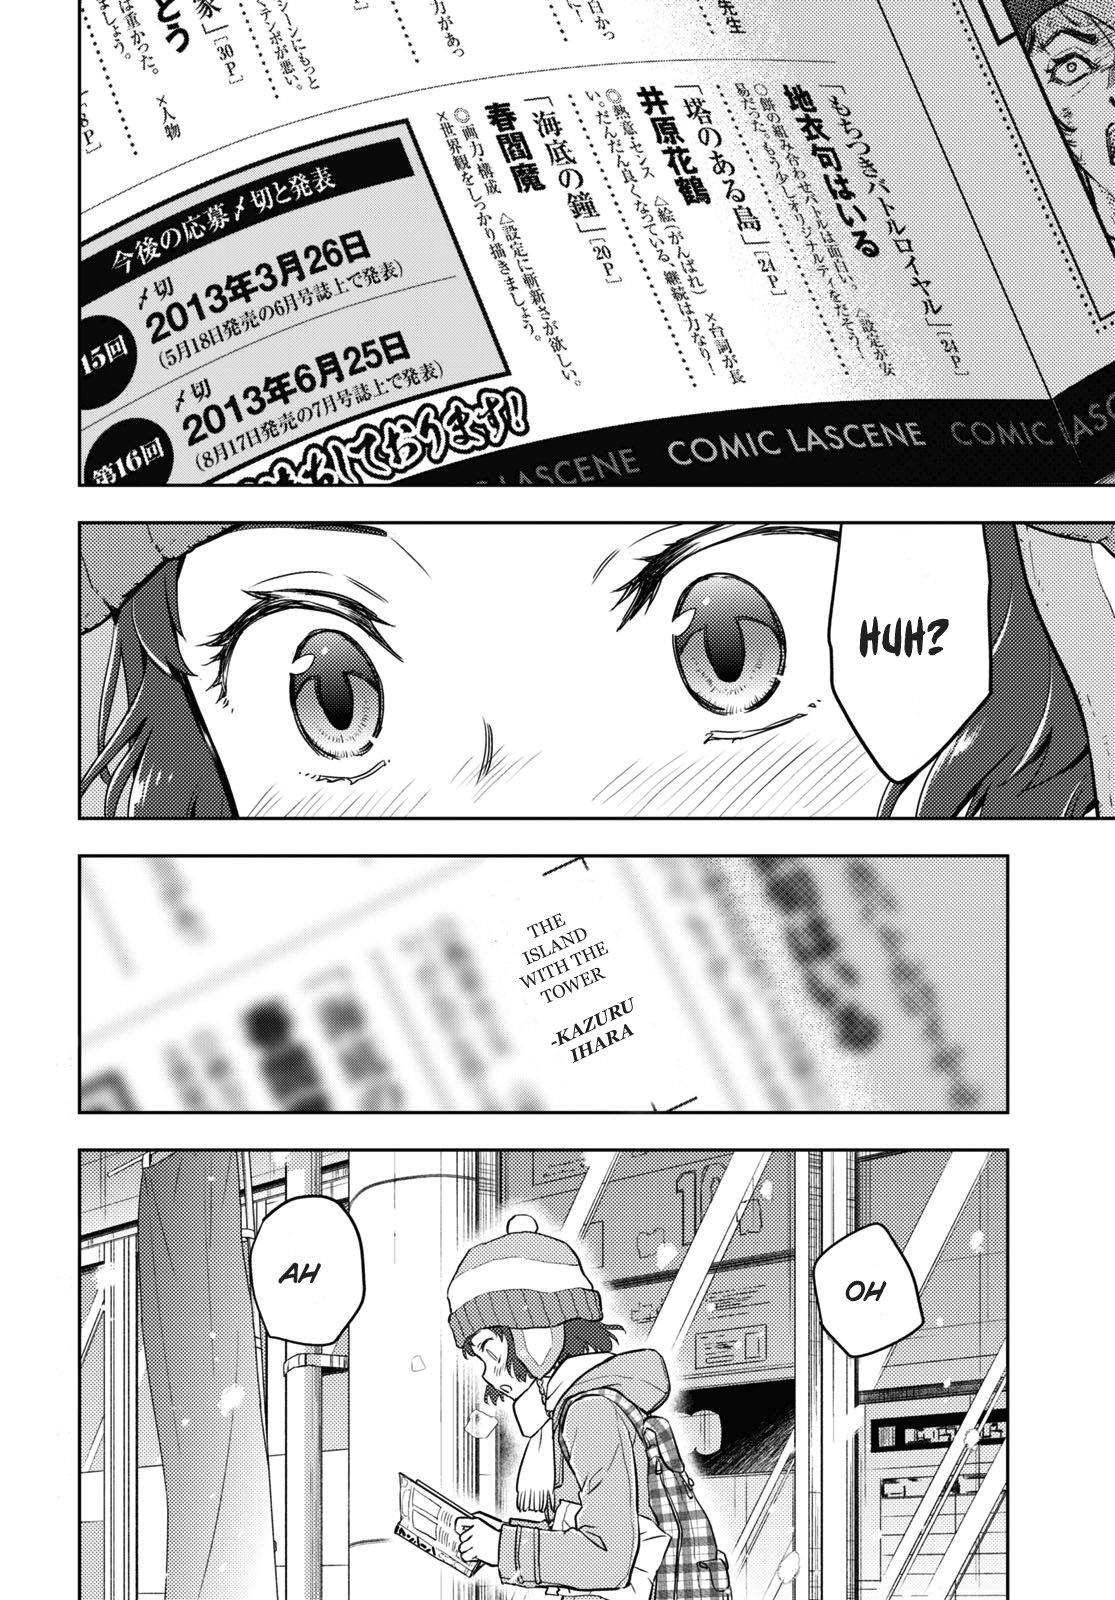 Hyouka chapter 90 page 2